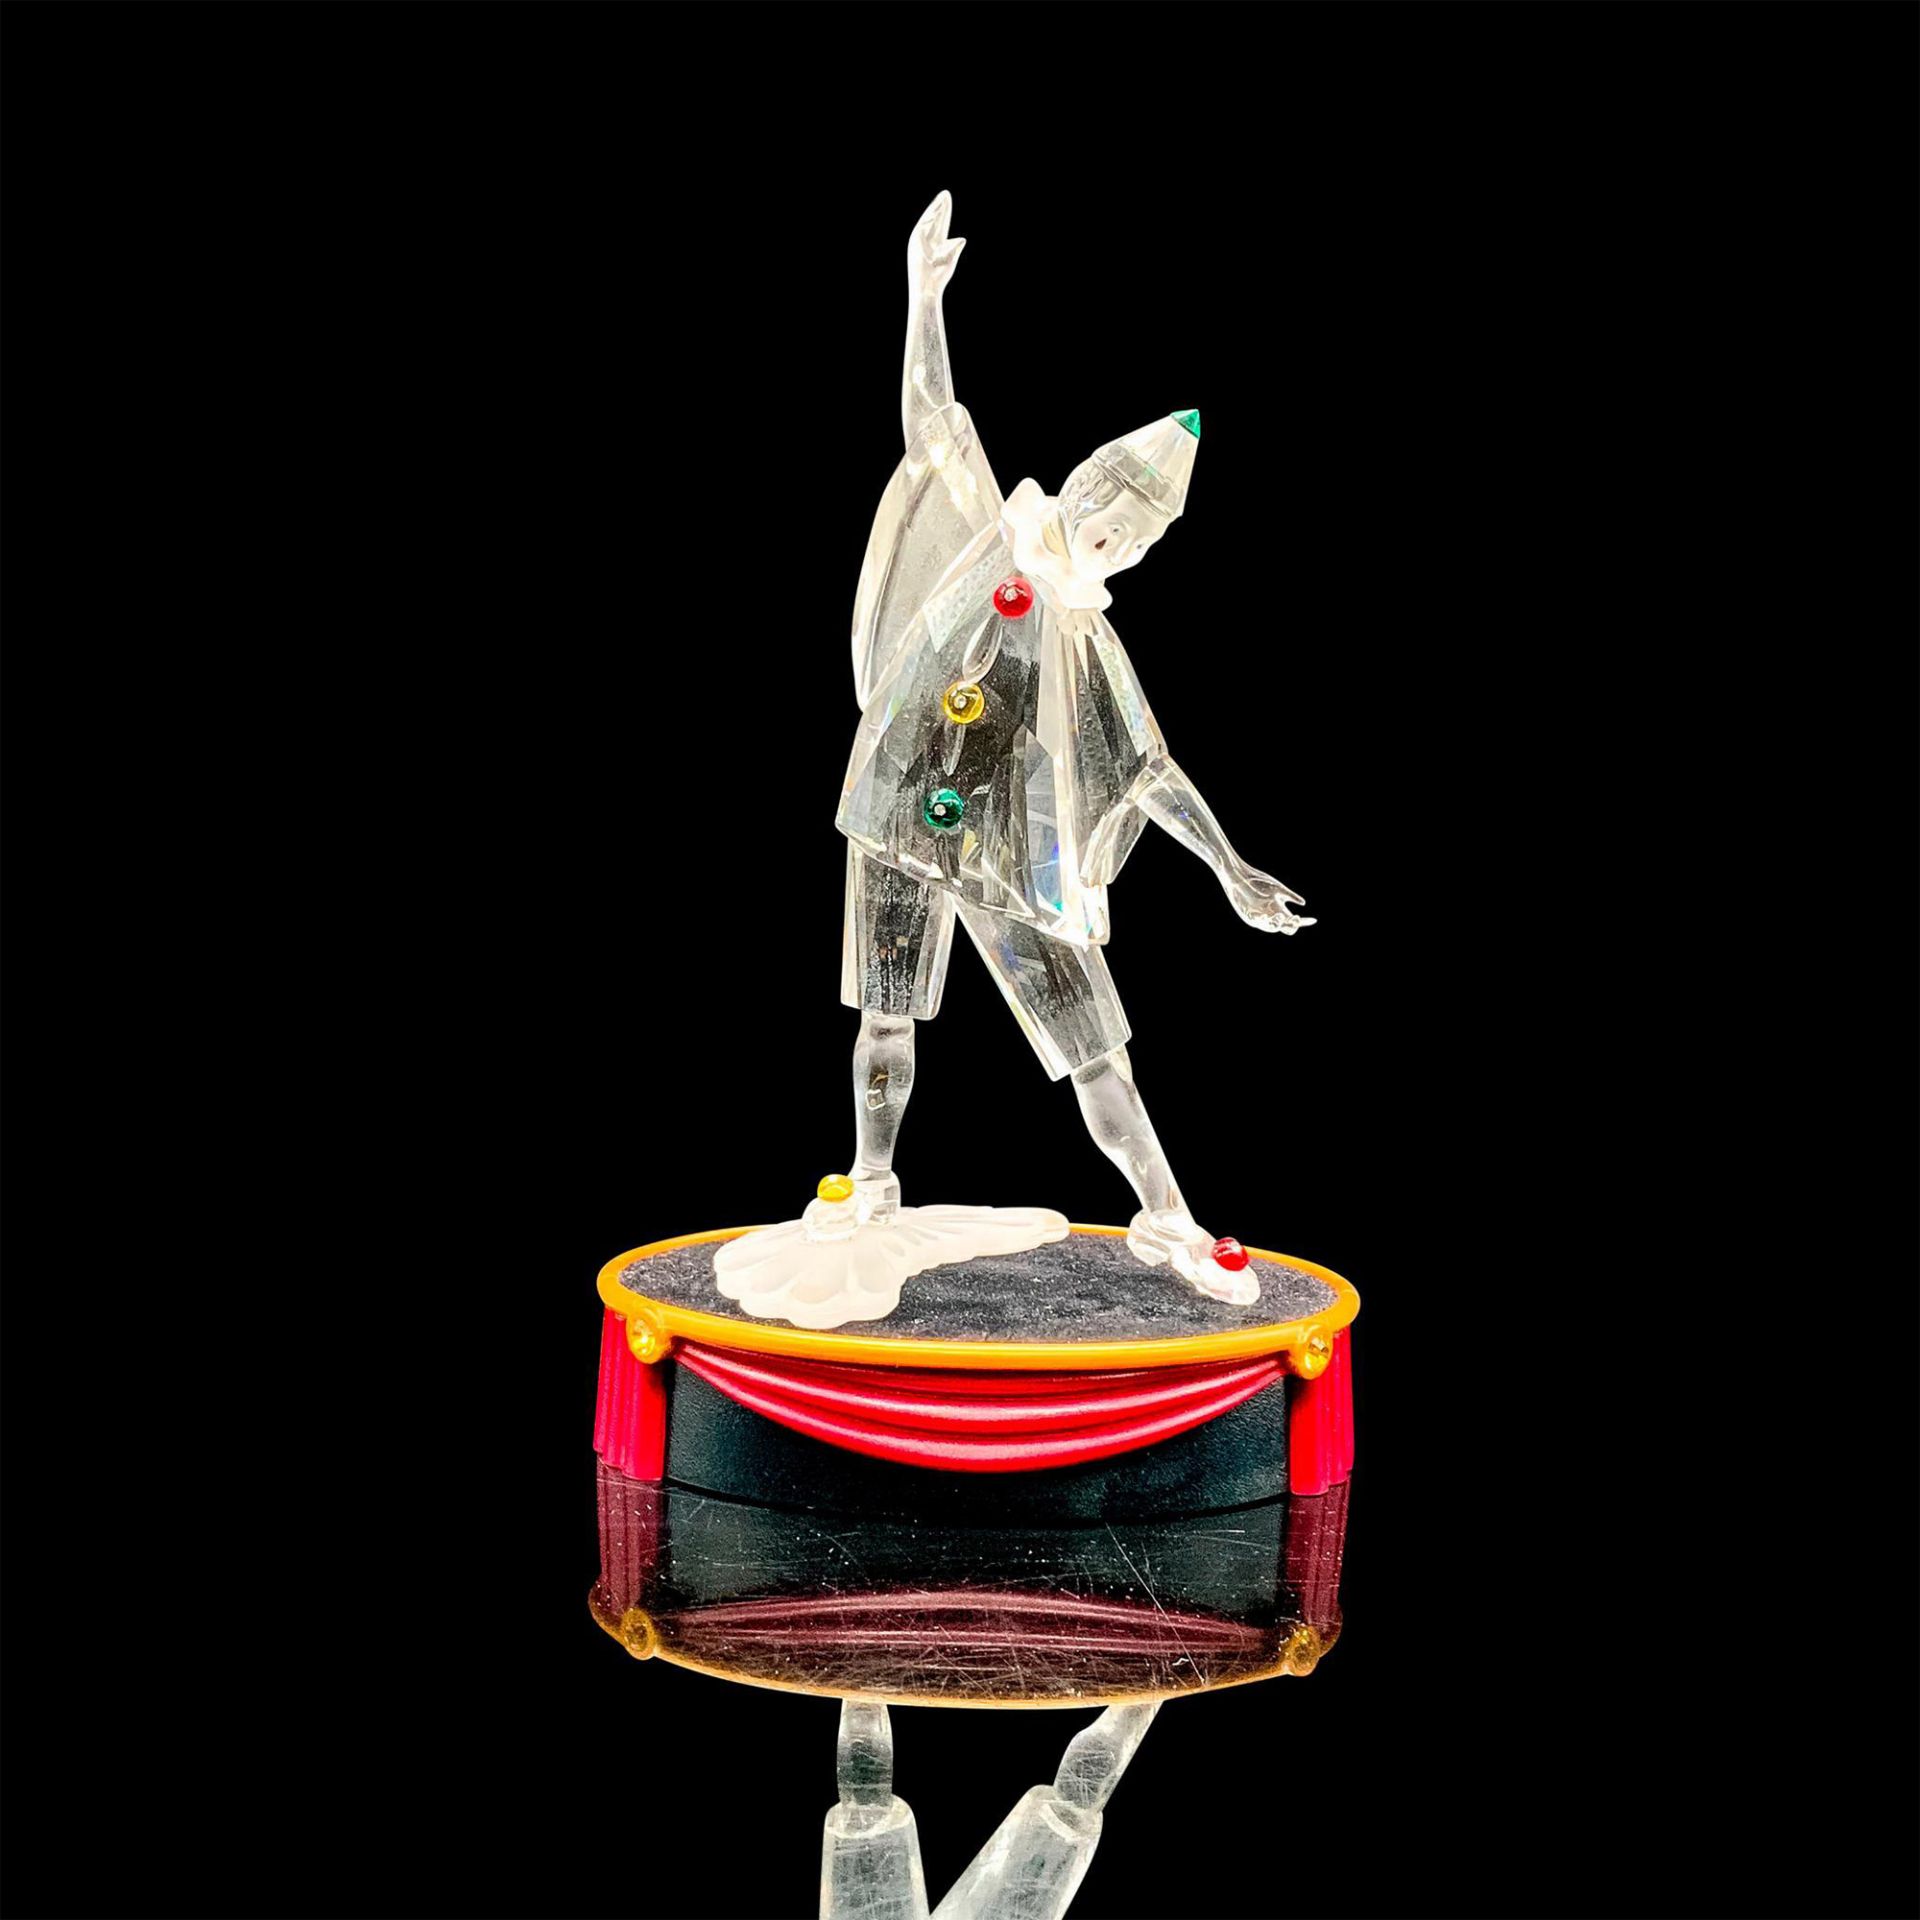 Swarovski Crystal Figurine and Base, Pierrot Masquerade